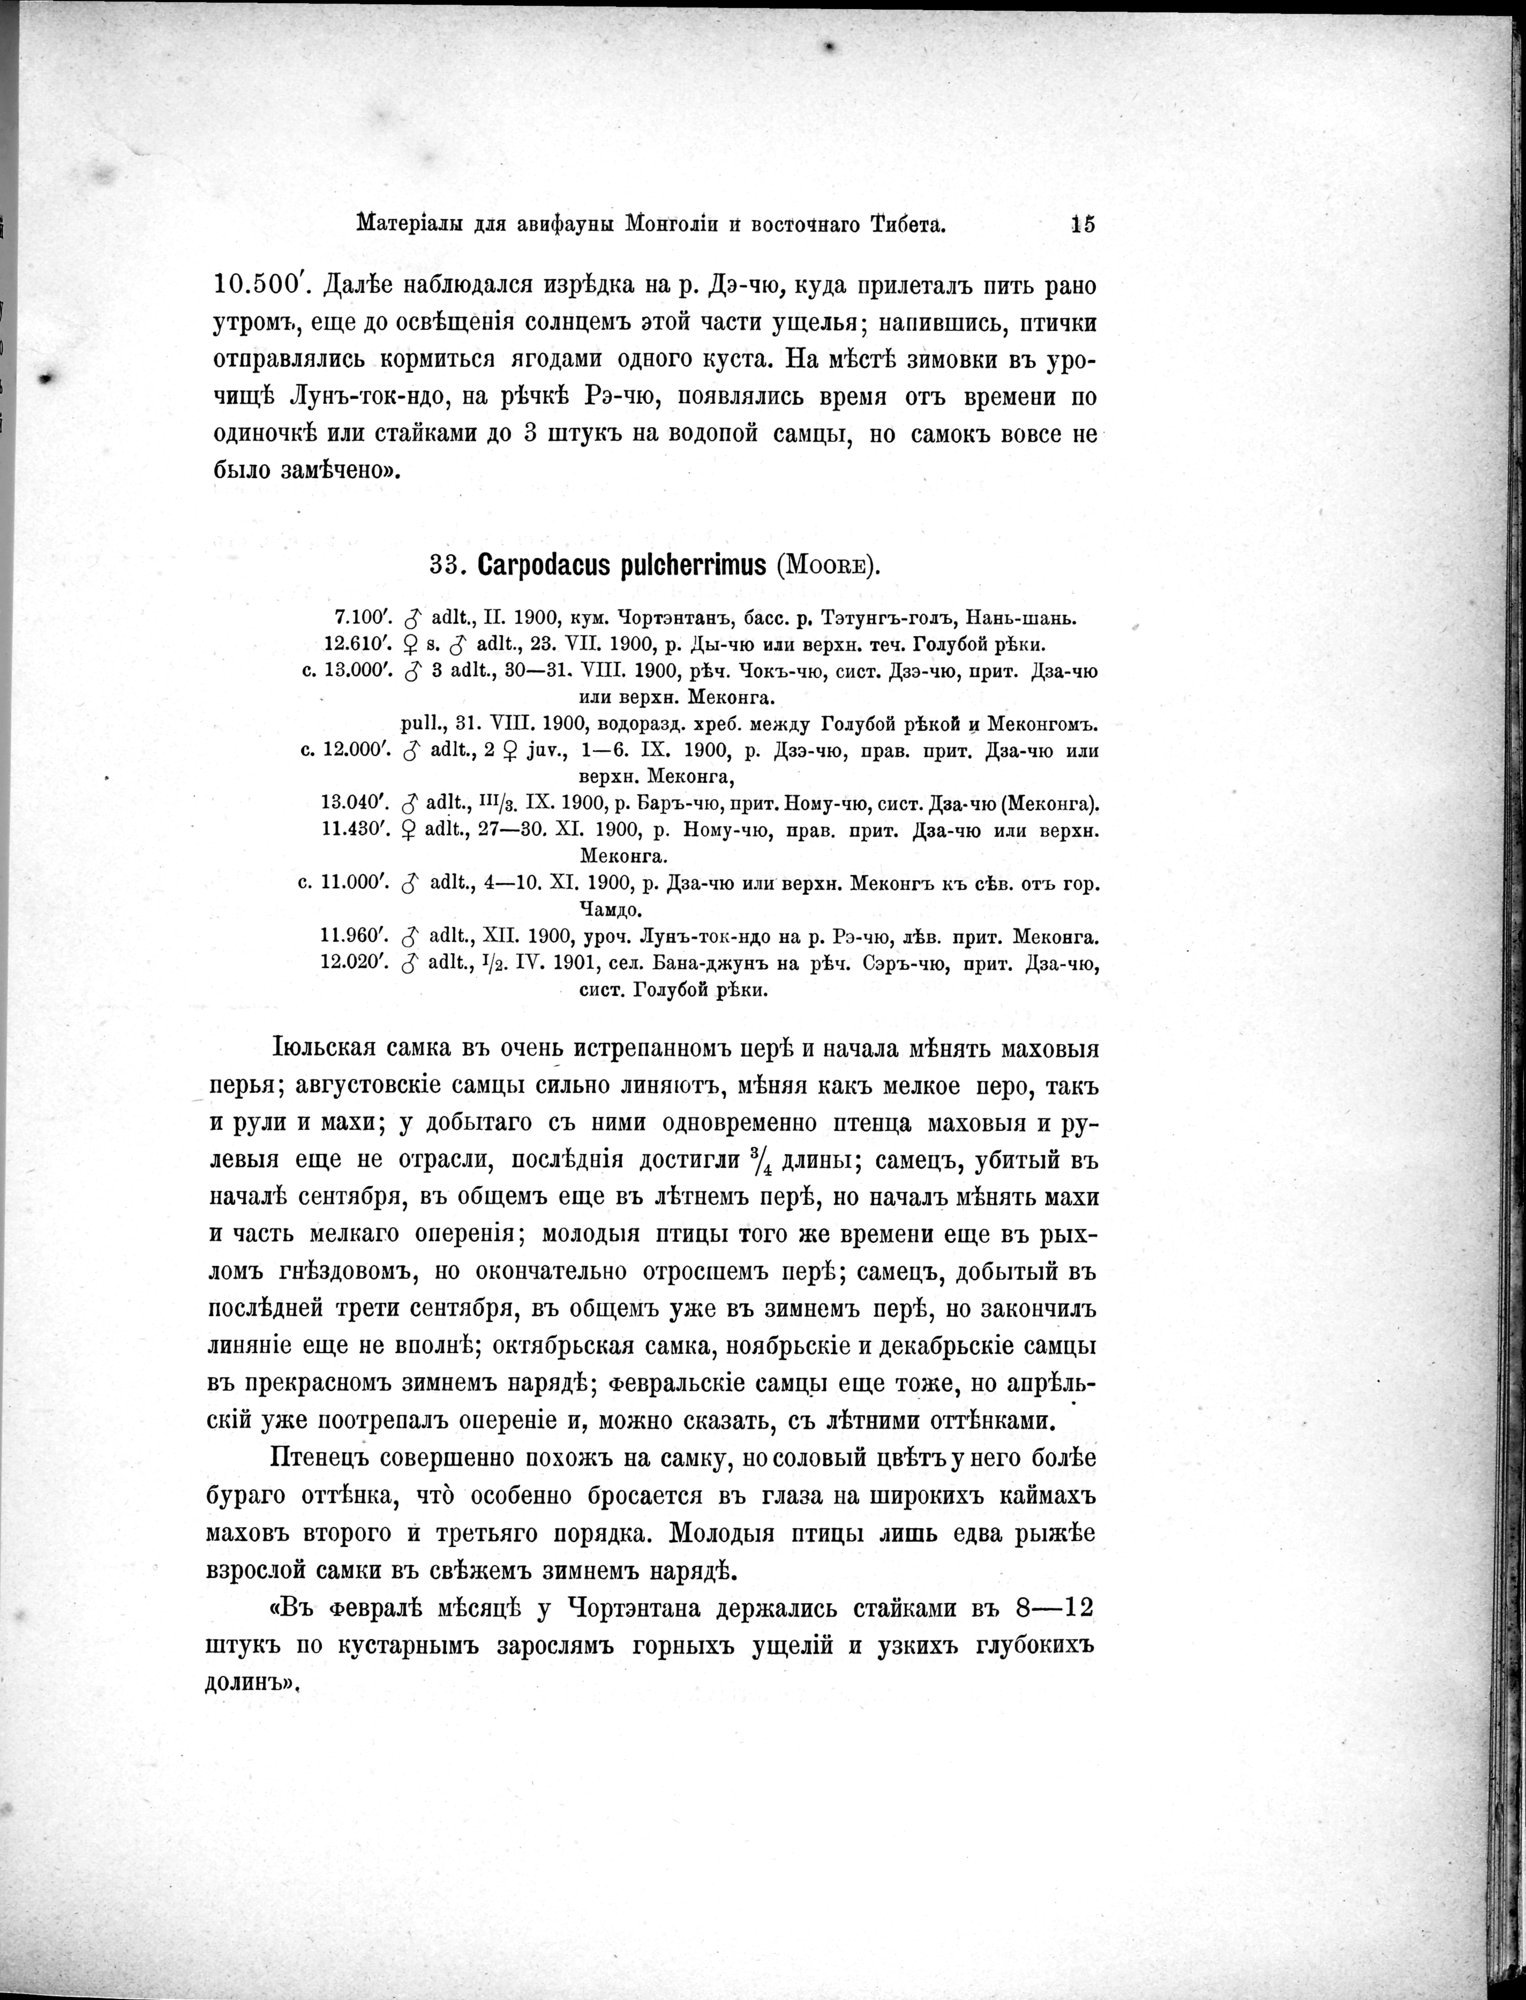 Mongoliia i Kam : vol.5 / Page 87 (Grayscale High Resolution Image)